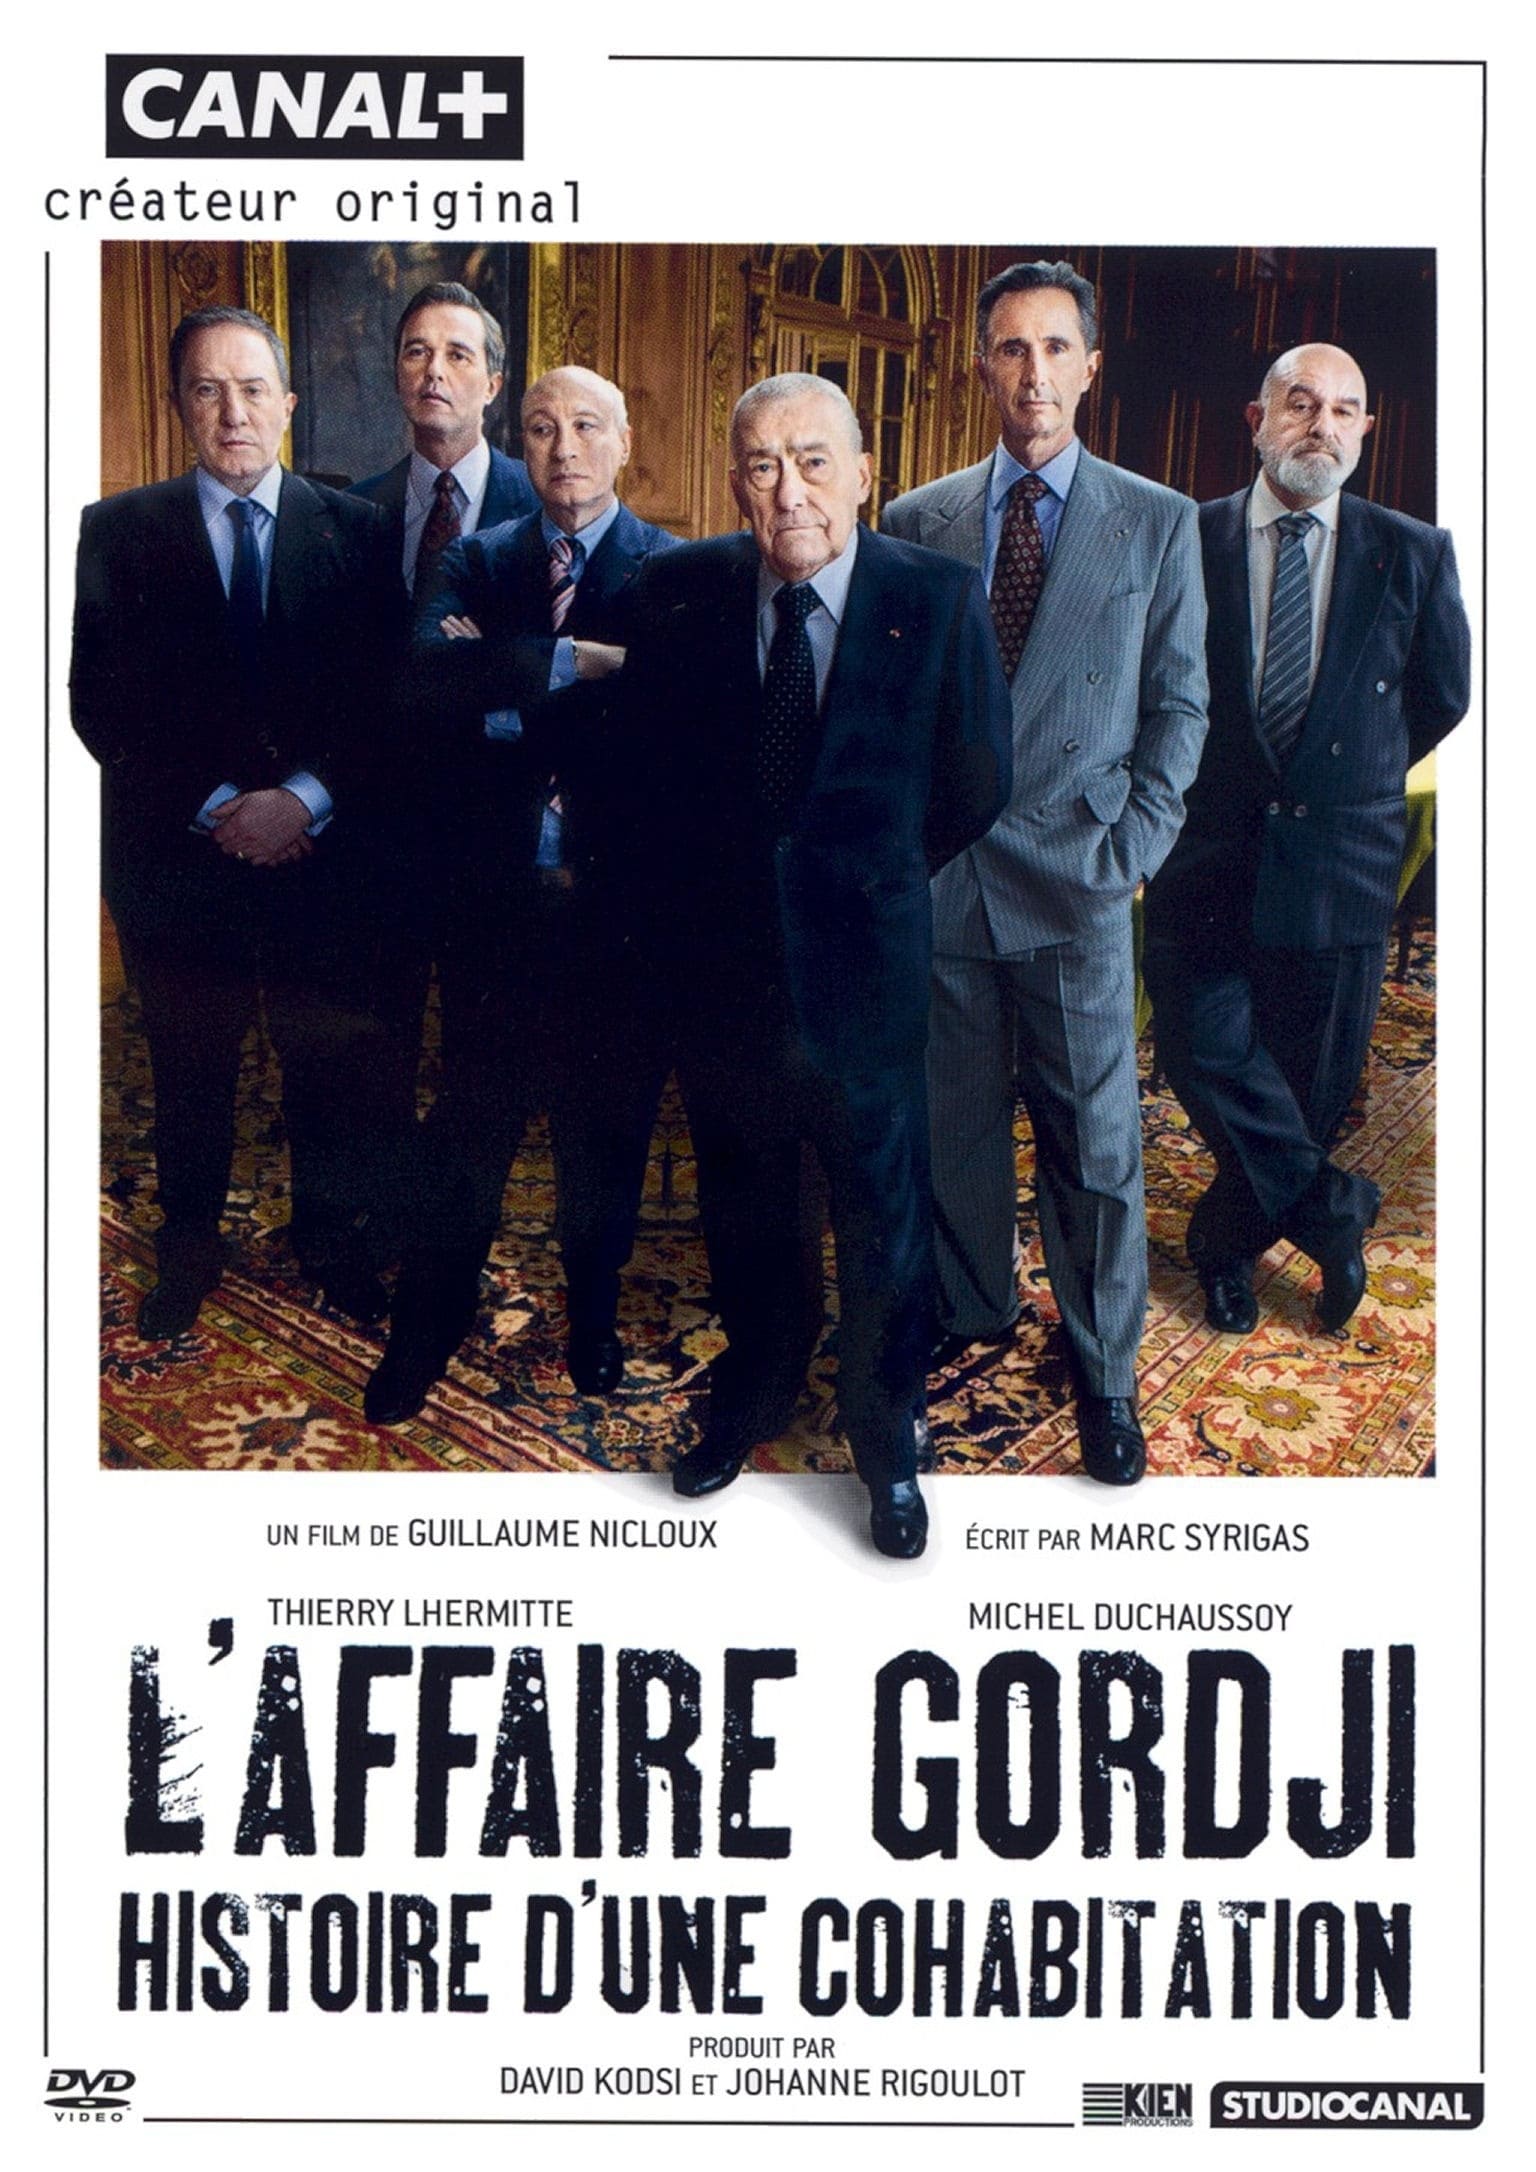 The Gordji Affair (2012)